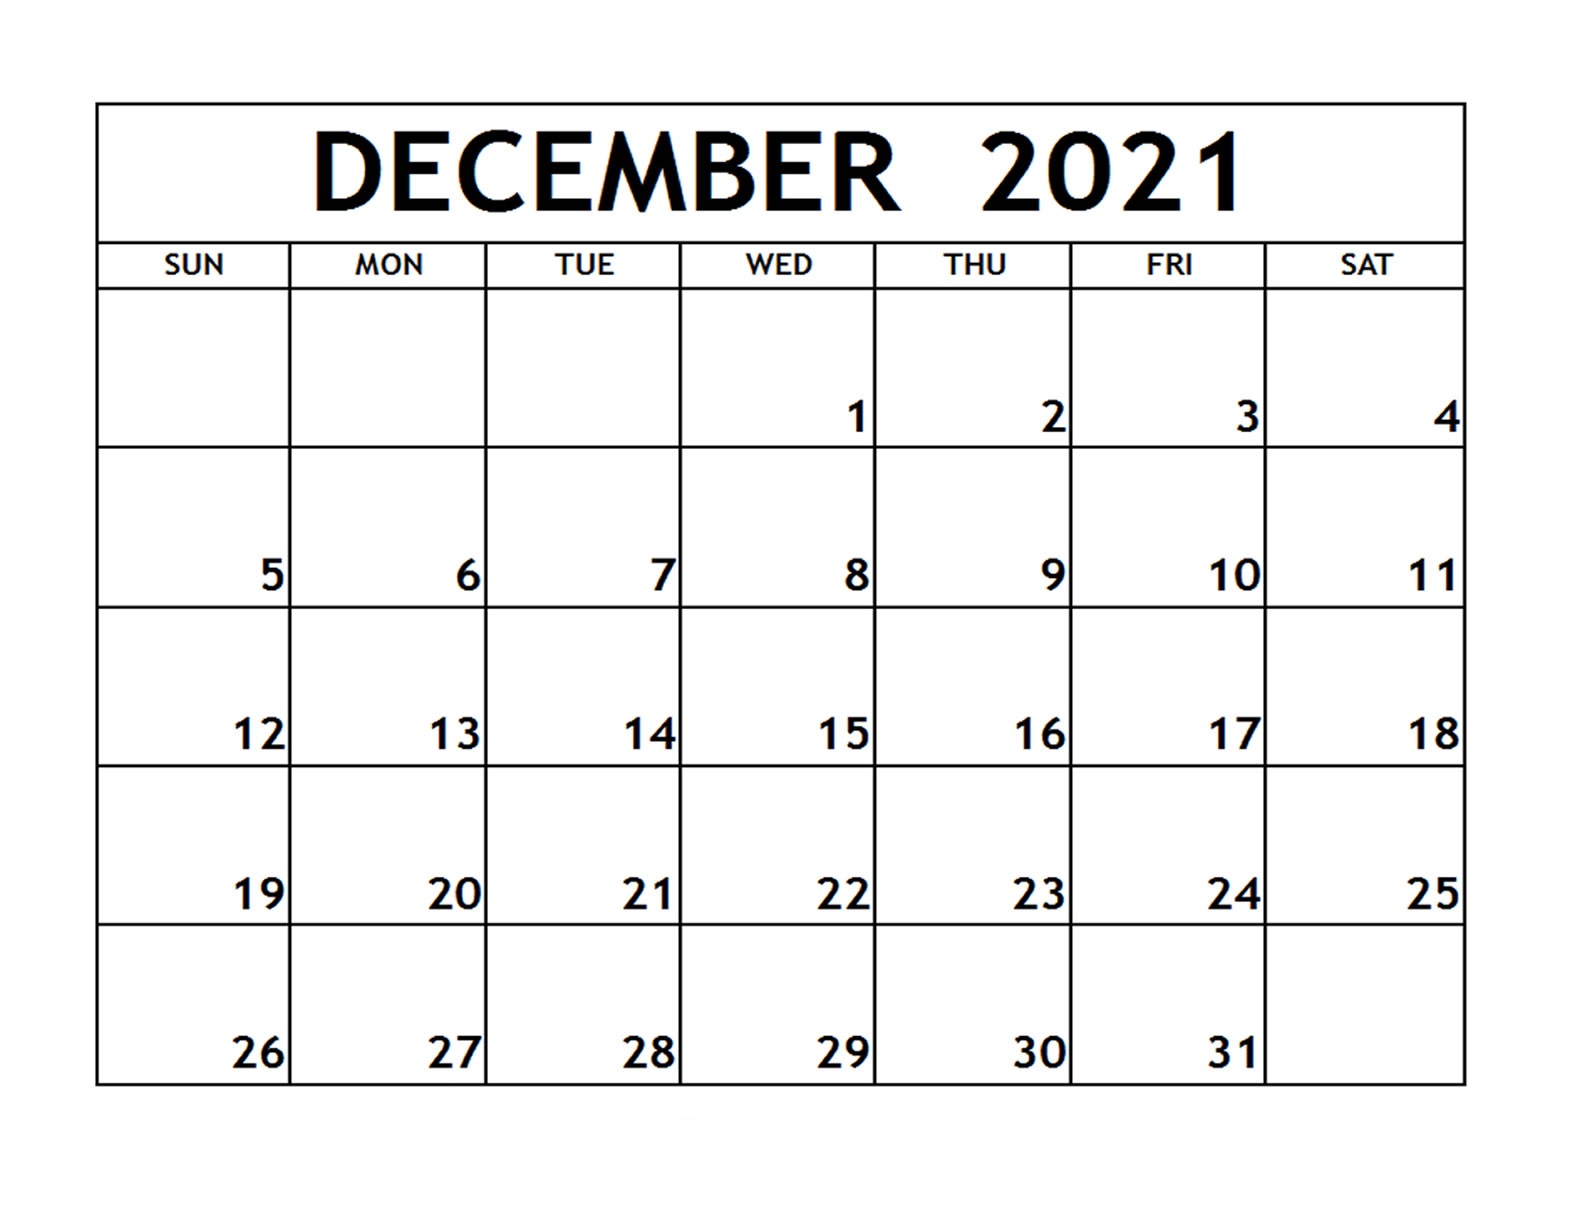 December 2021 Calendar With Bank Holidays